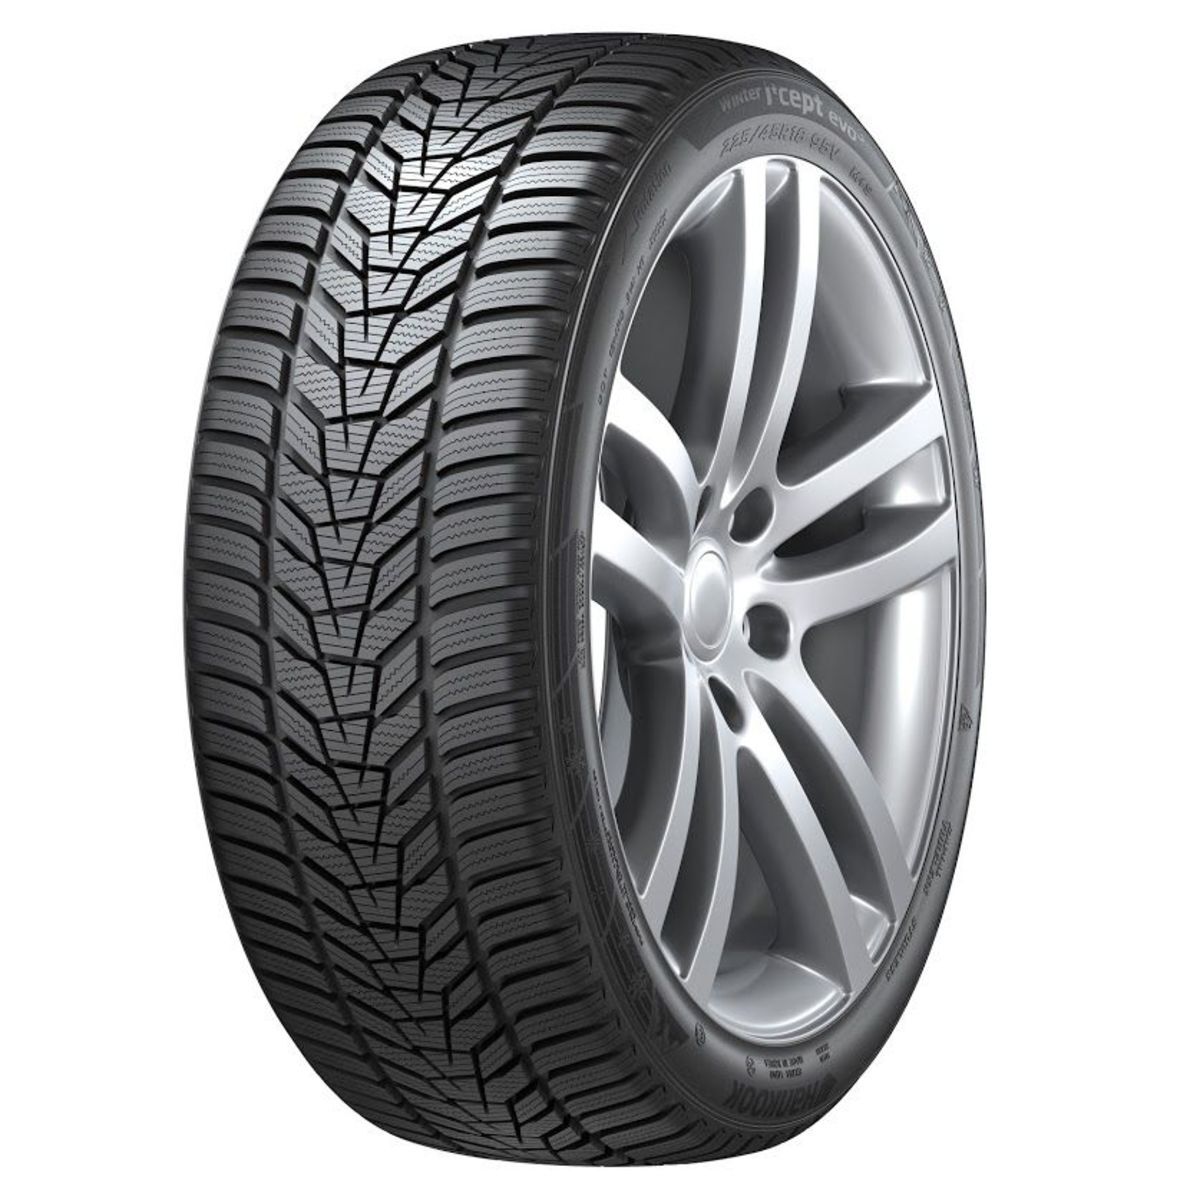 Neumáticos de invierno HANKOOK Winter i*cept evo3 W330 255/40R18 XL 99V